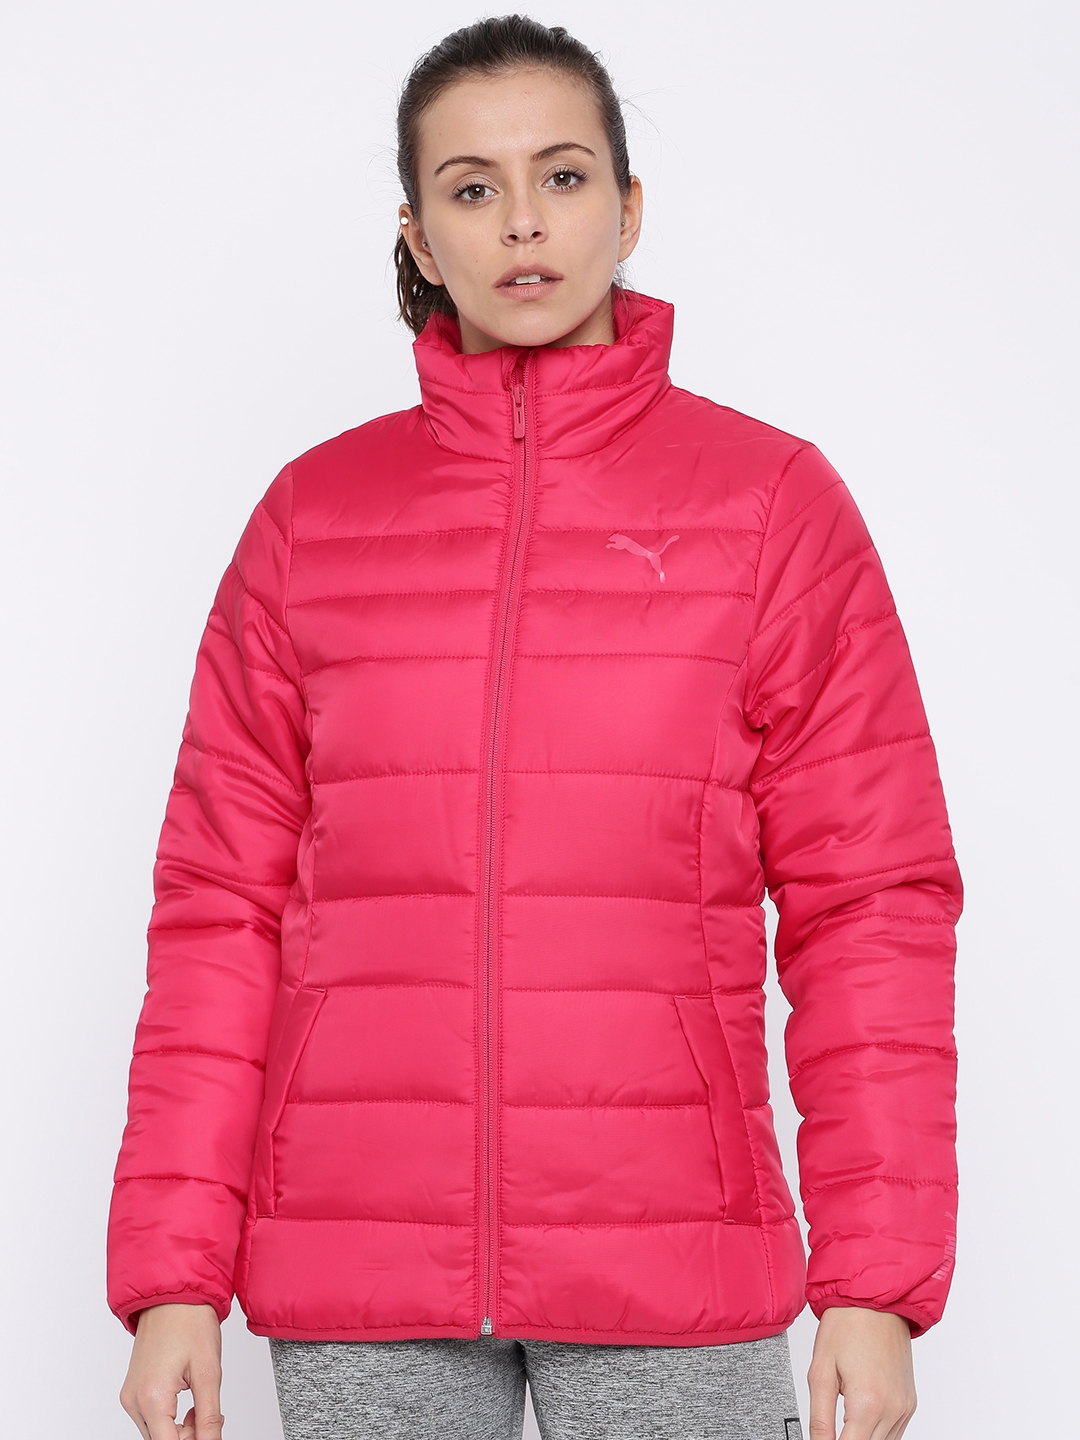 puma jacket pink